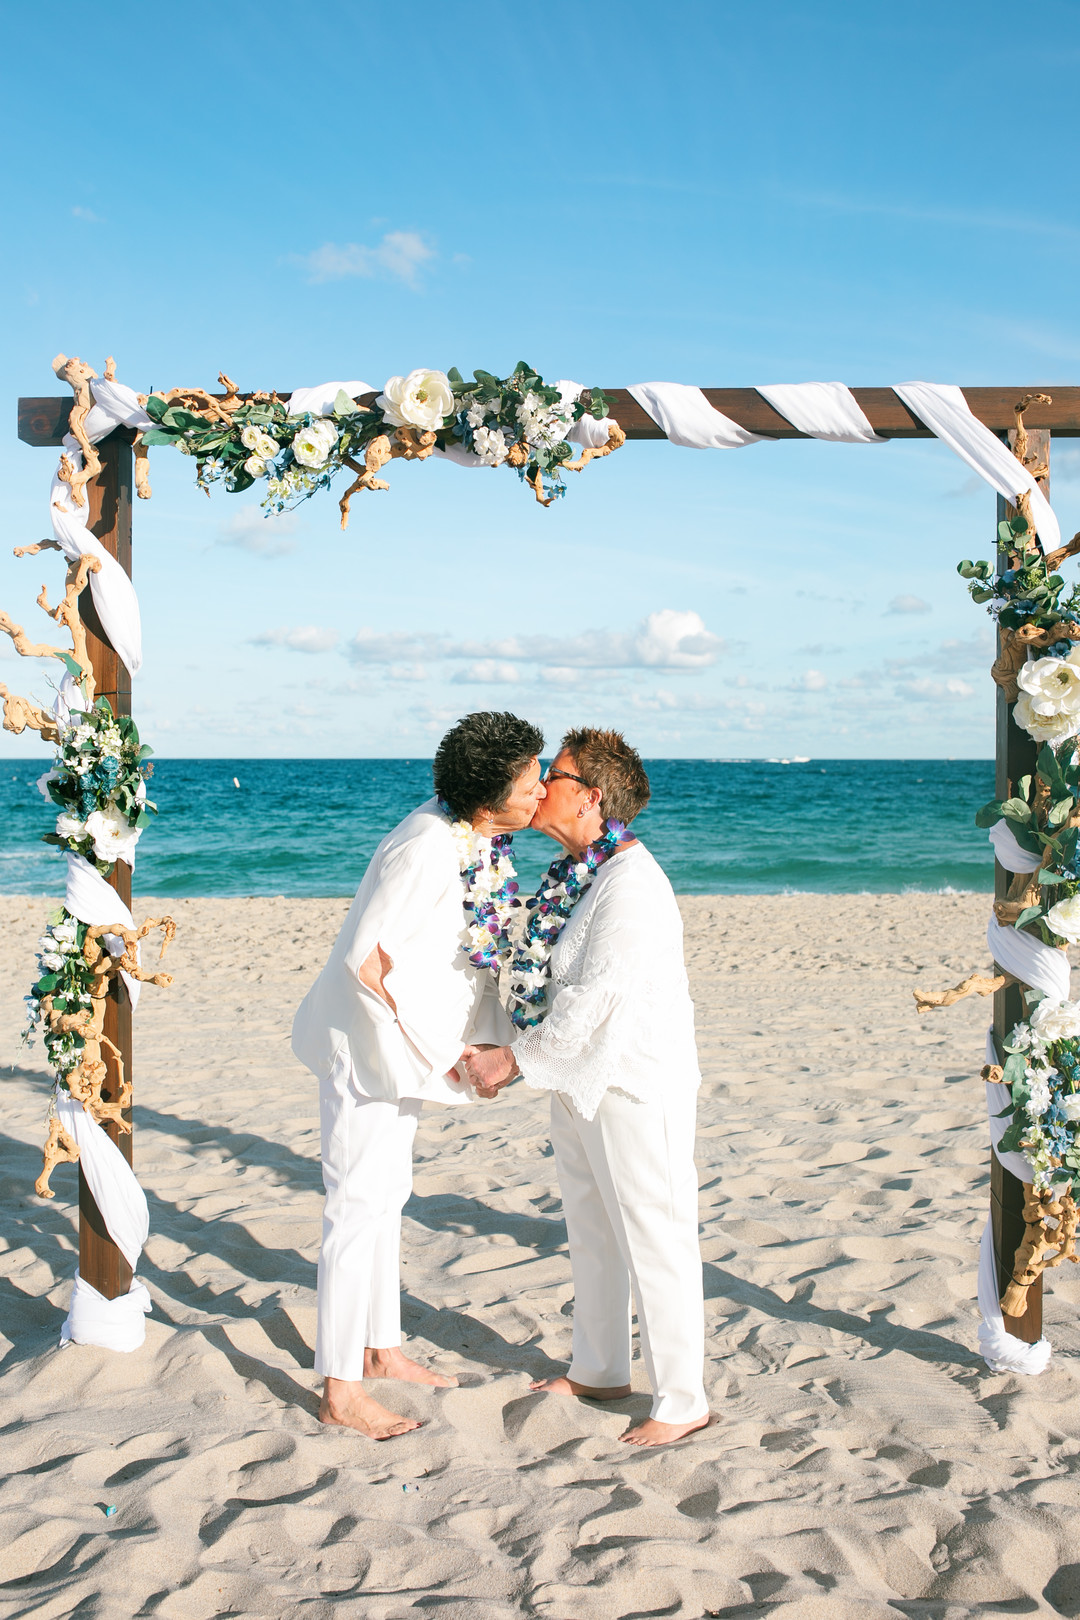 Romantic beach wedding in Fort Lauderdale, Florida two brides lesbian wedding vows kiss